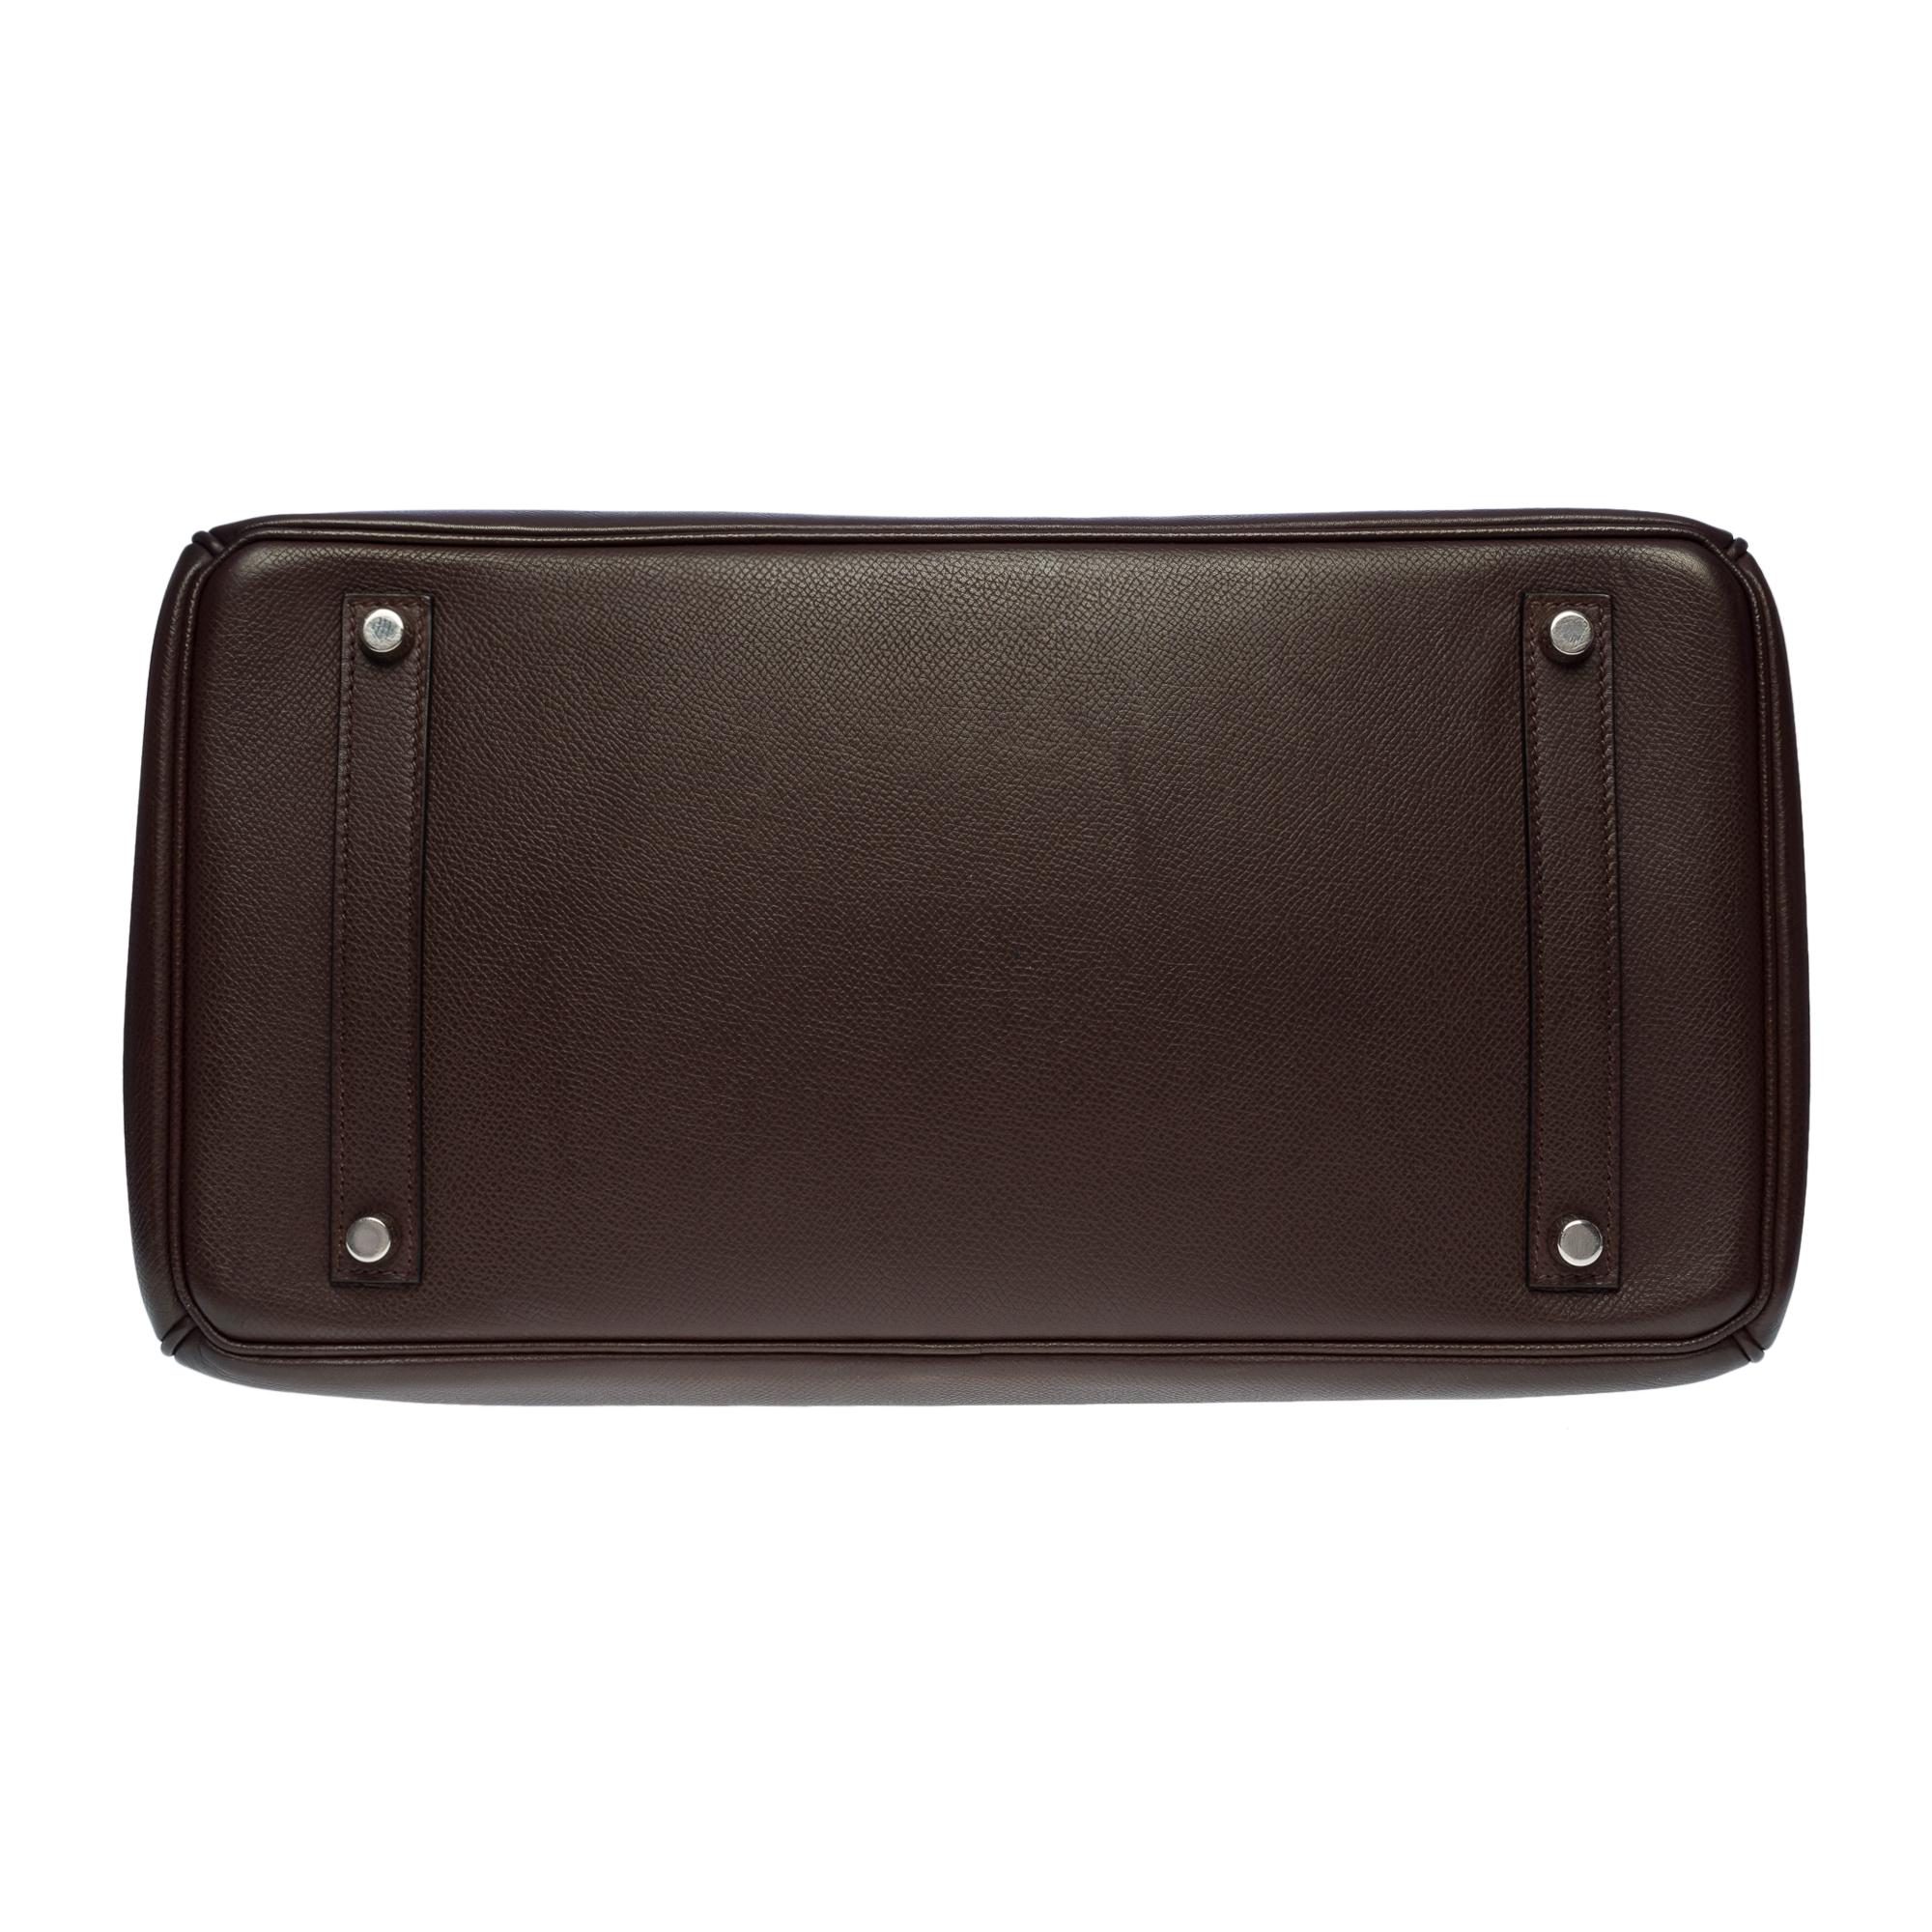 Stunning Hermès Birkin 35 handbag in Brown Epsom leather, SHW 3